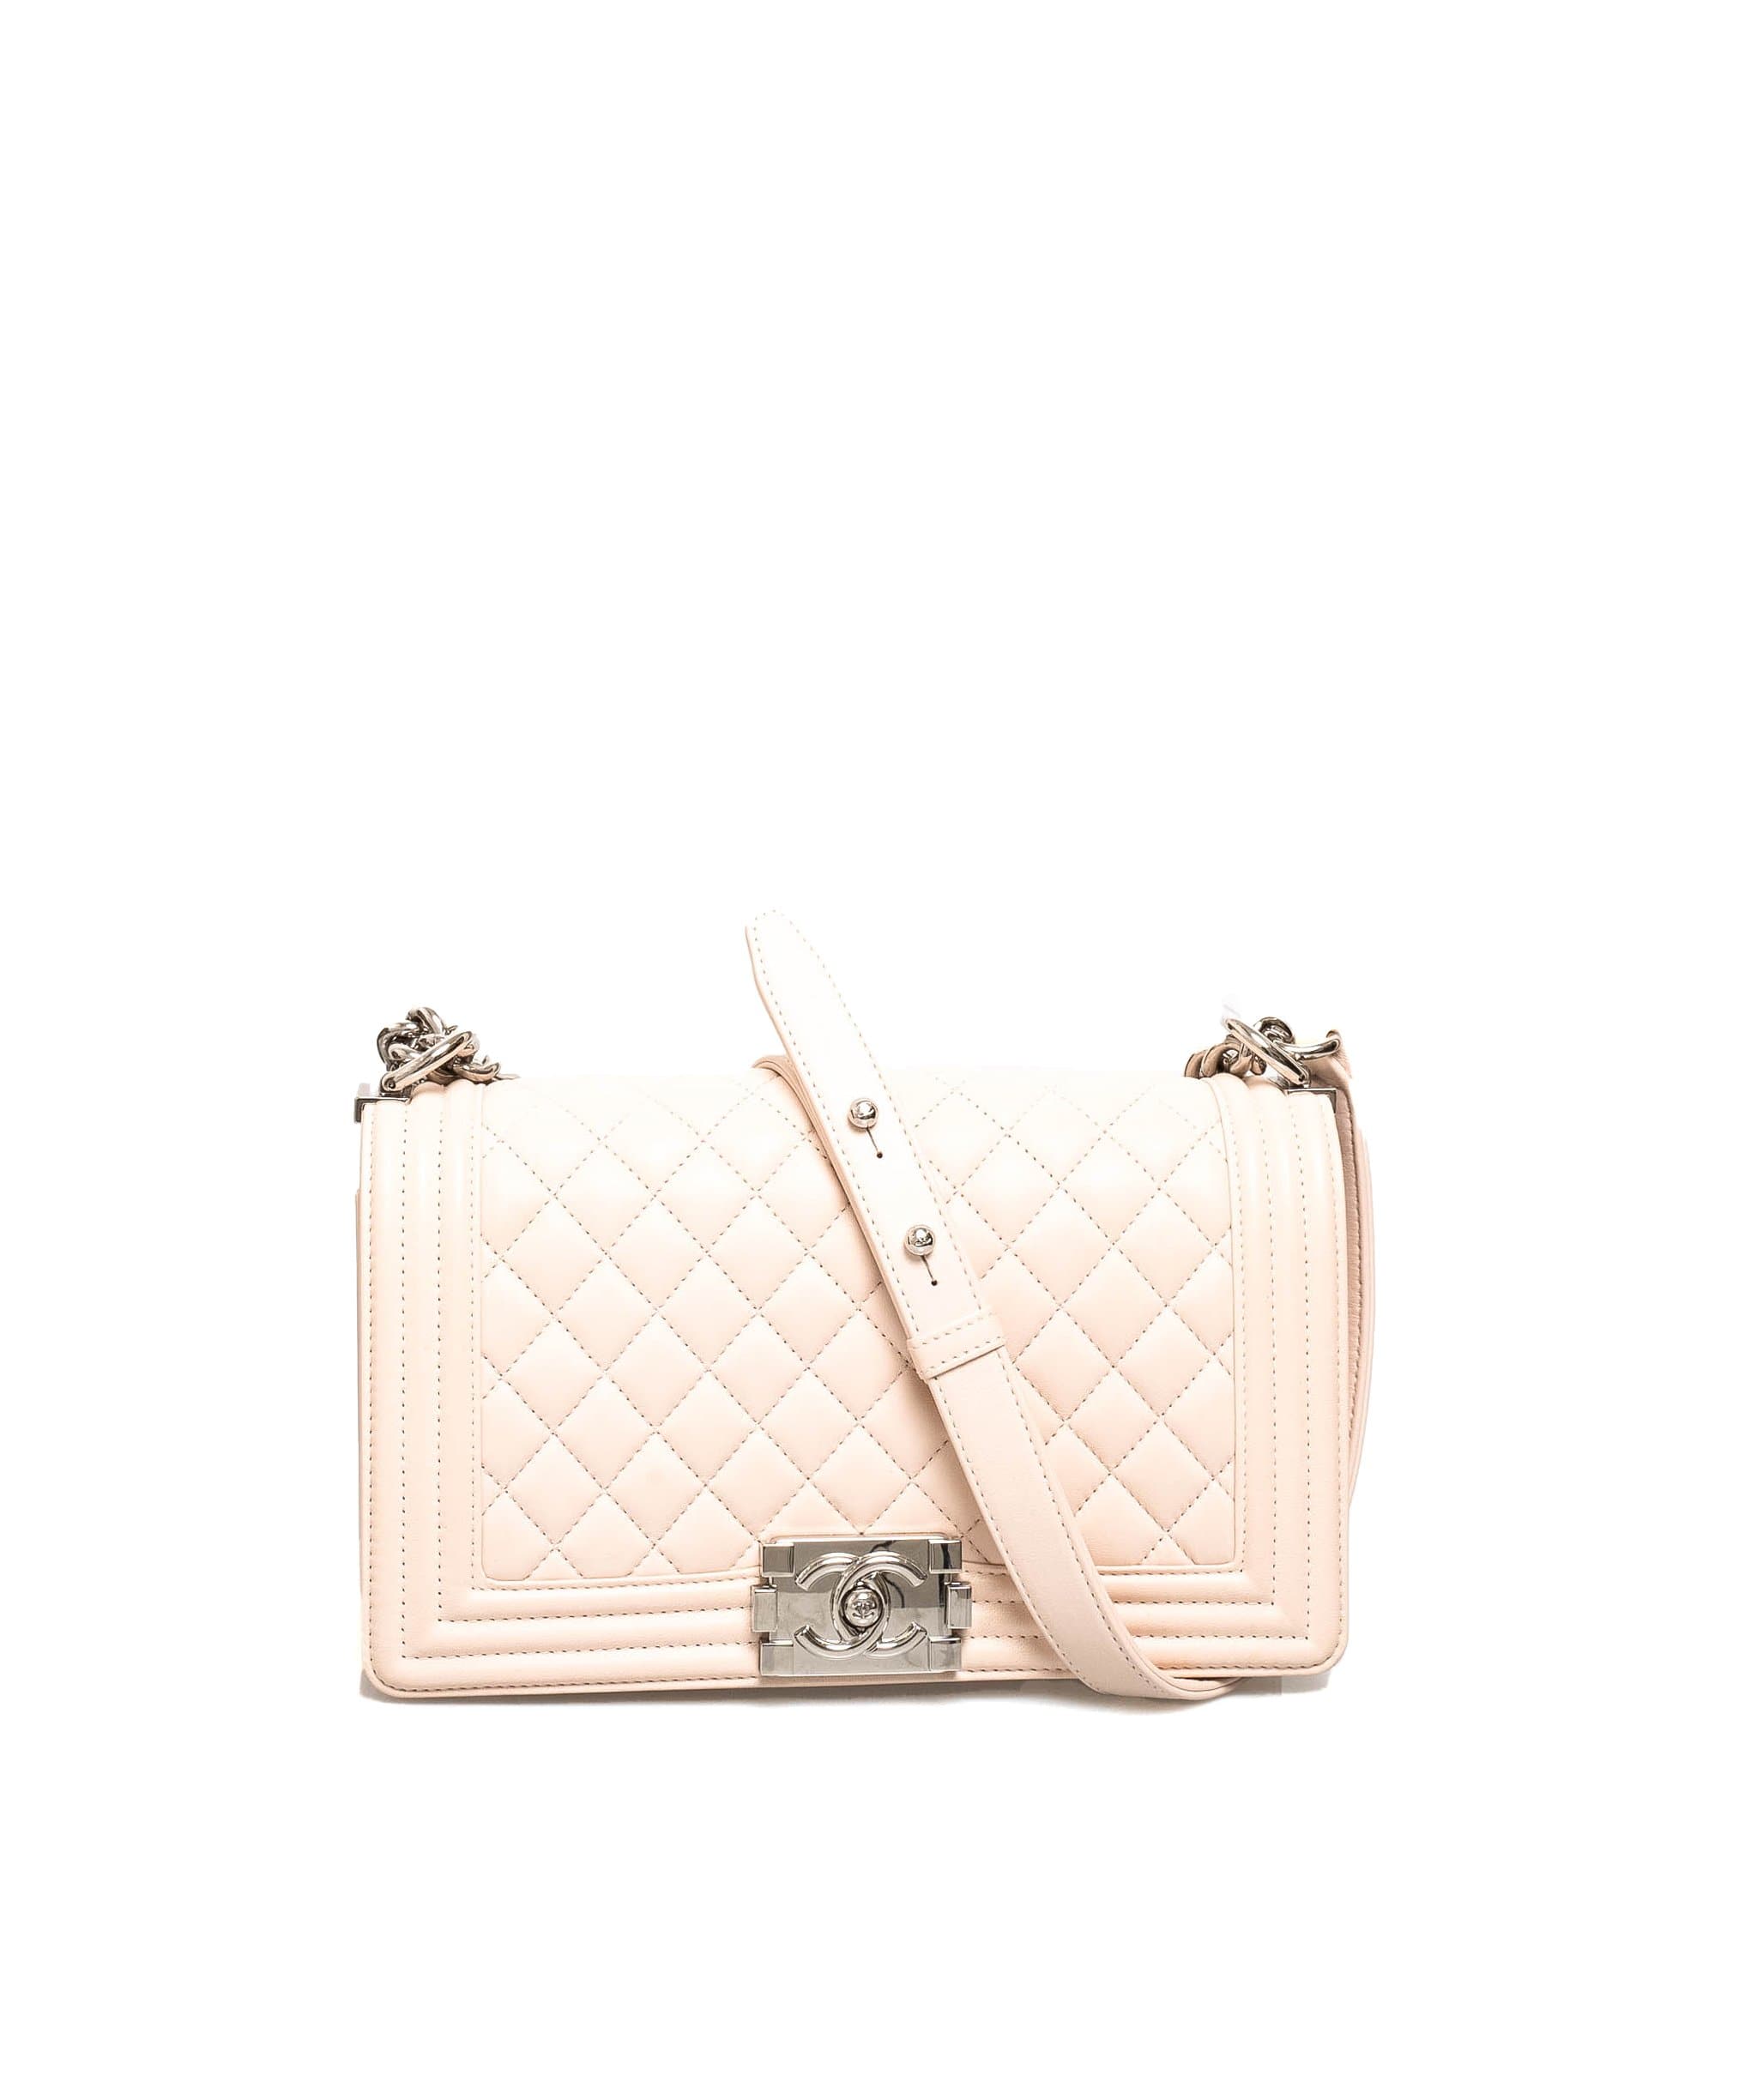 Chanel Chanel Le Boy Medium Bag Pink Beige with Silver Hardware - ASL1717